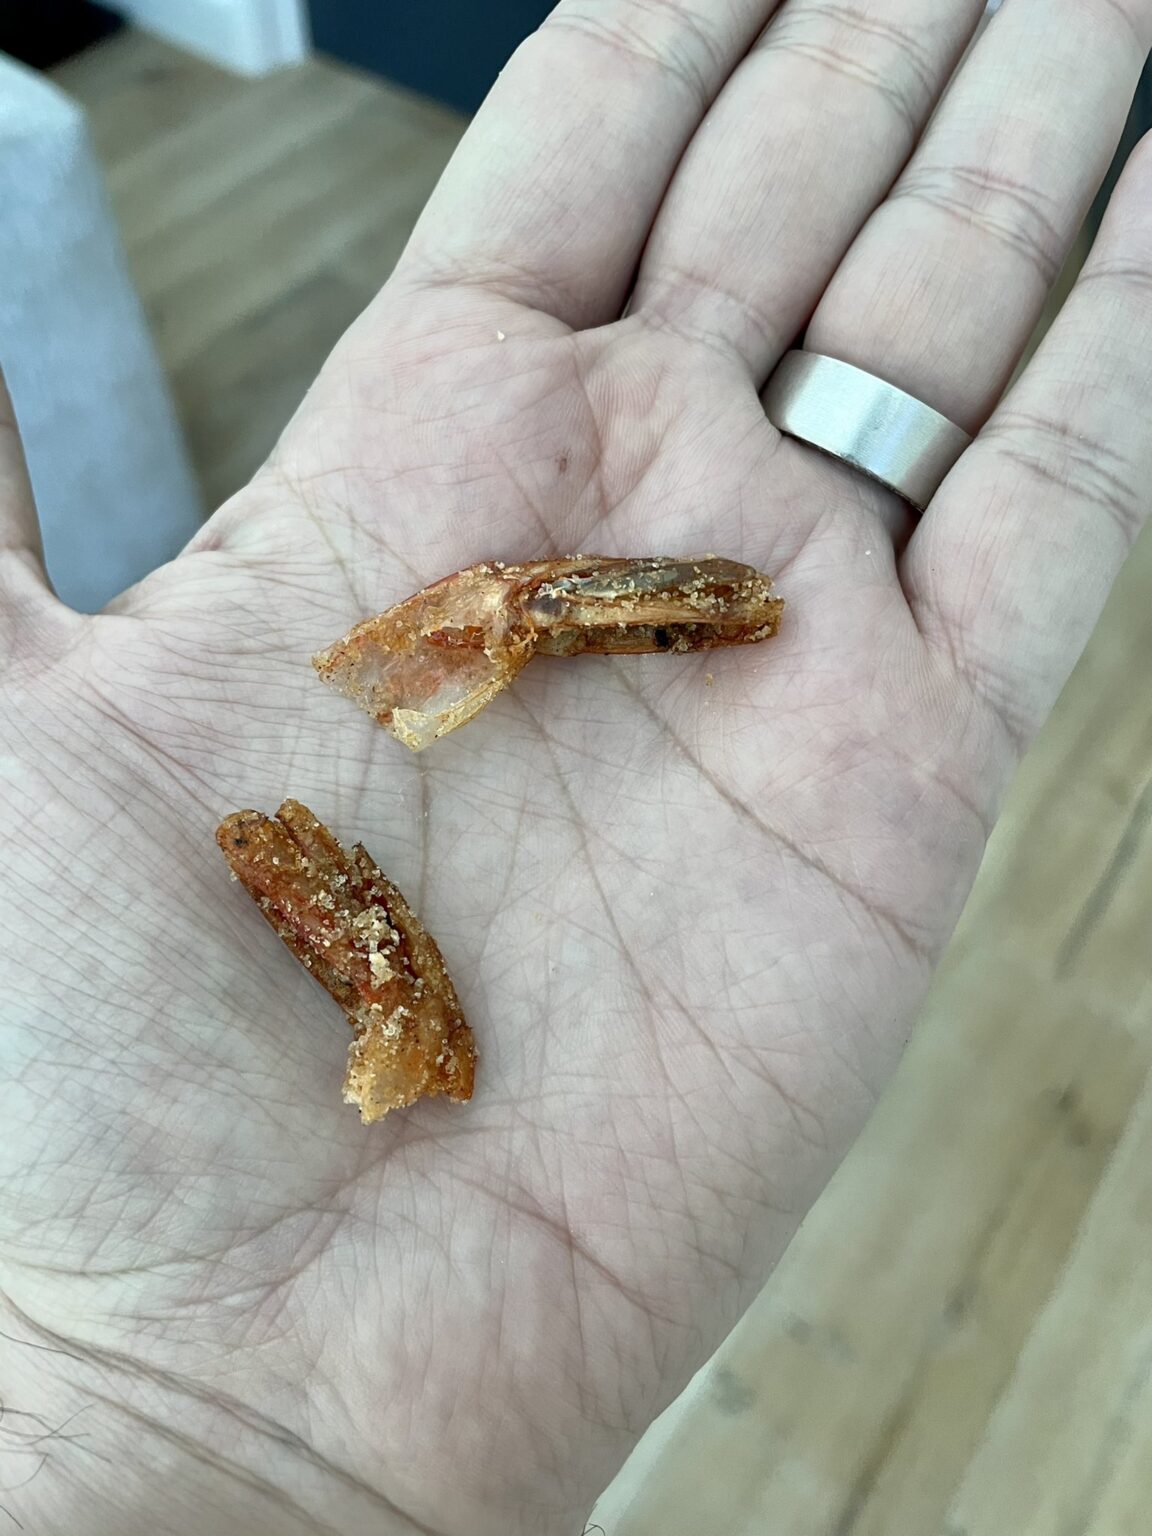 man finds shrimp in cinnamon toast crunch